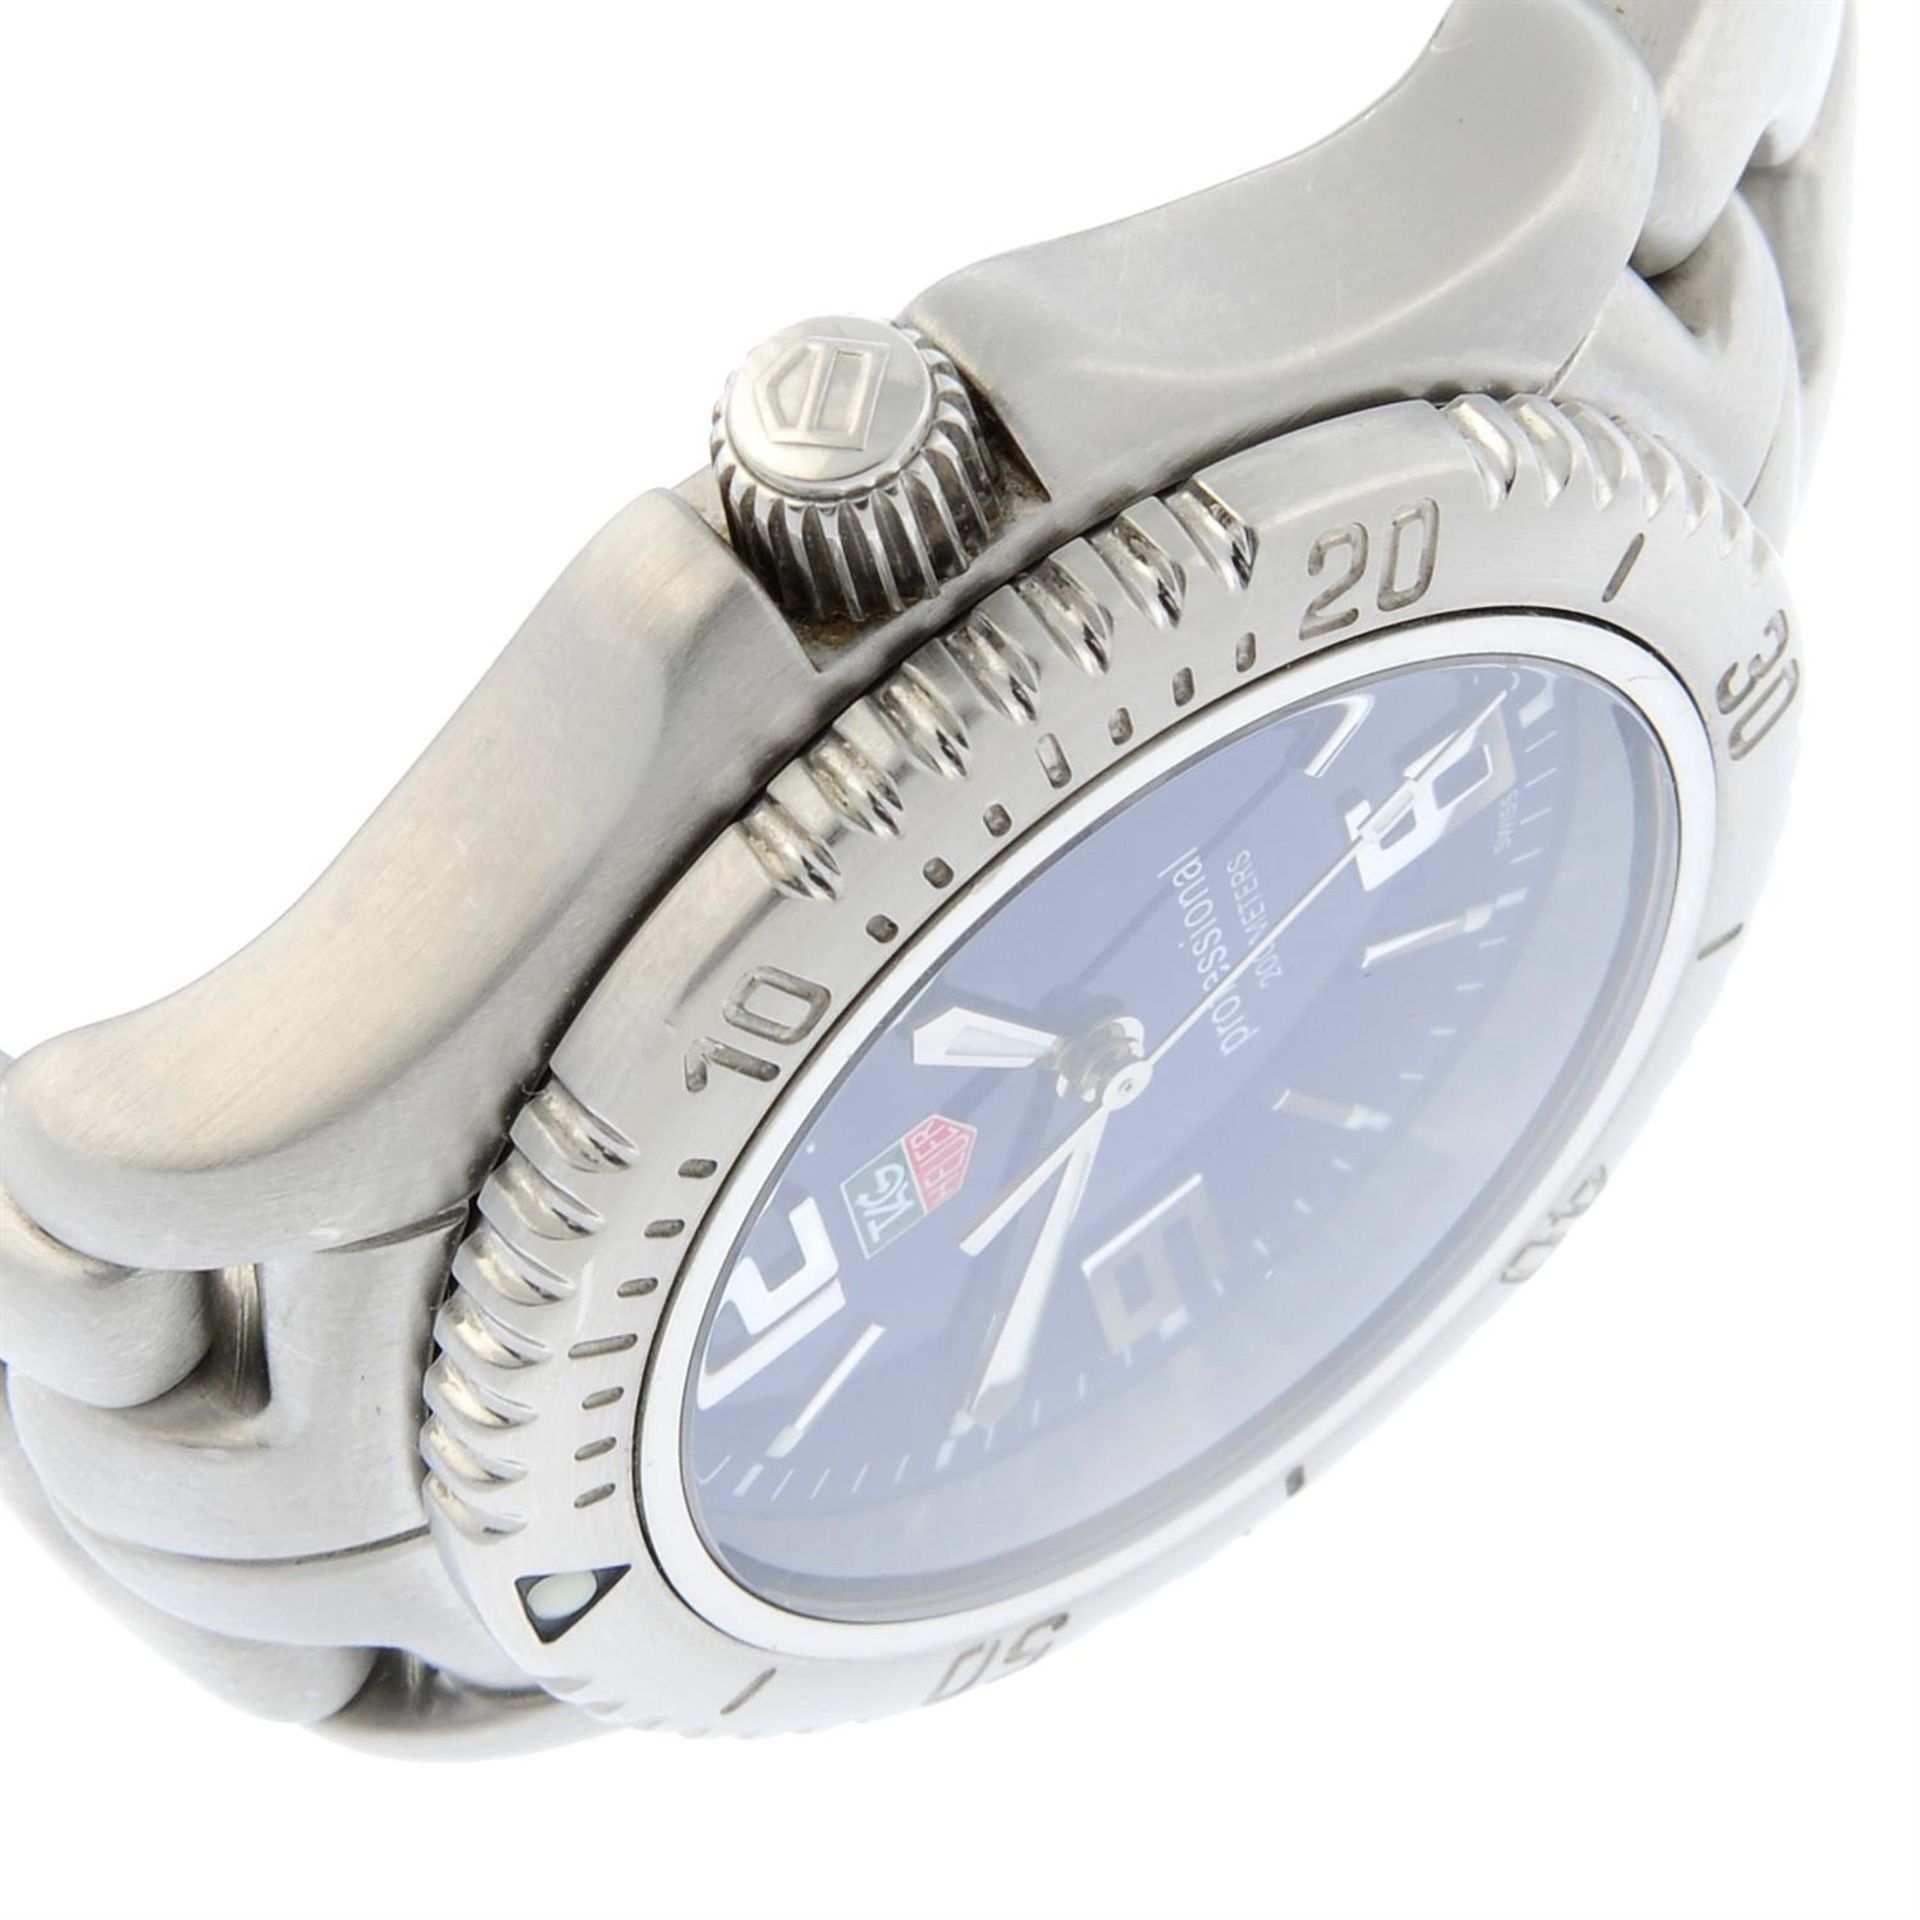 TAG HEUER - a stainless steel Link bracelet watch, 36mm. - Bild 3 aus 4